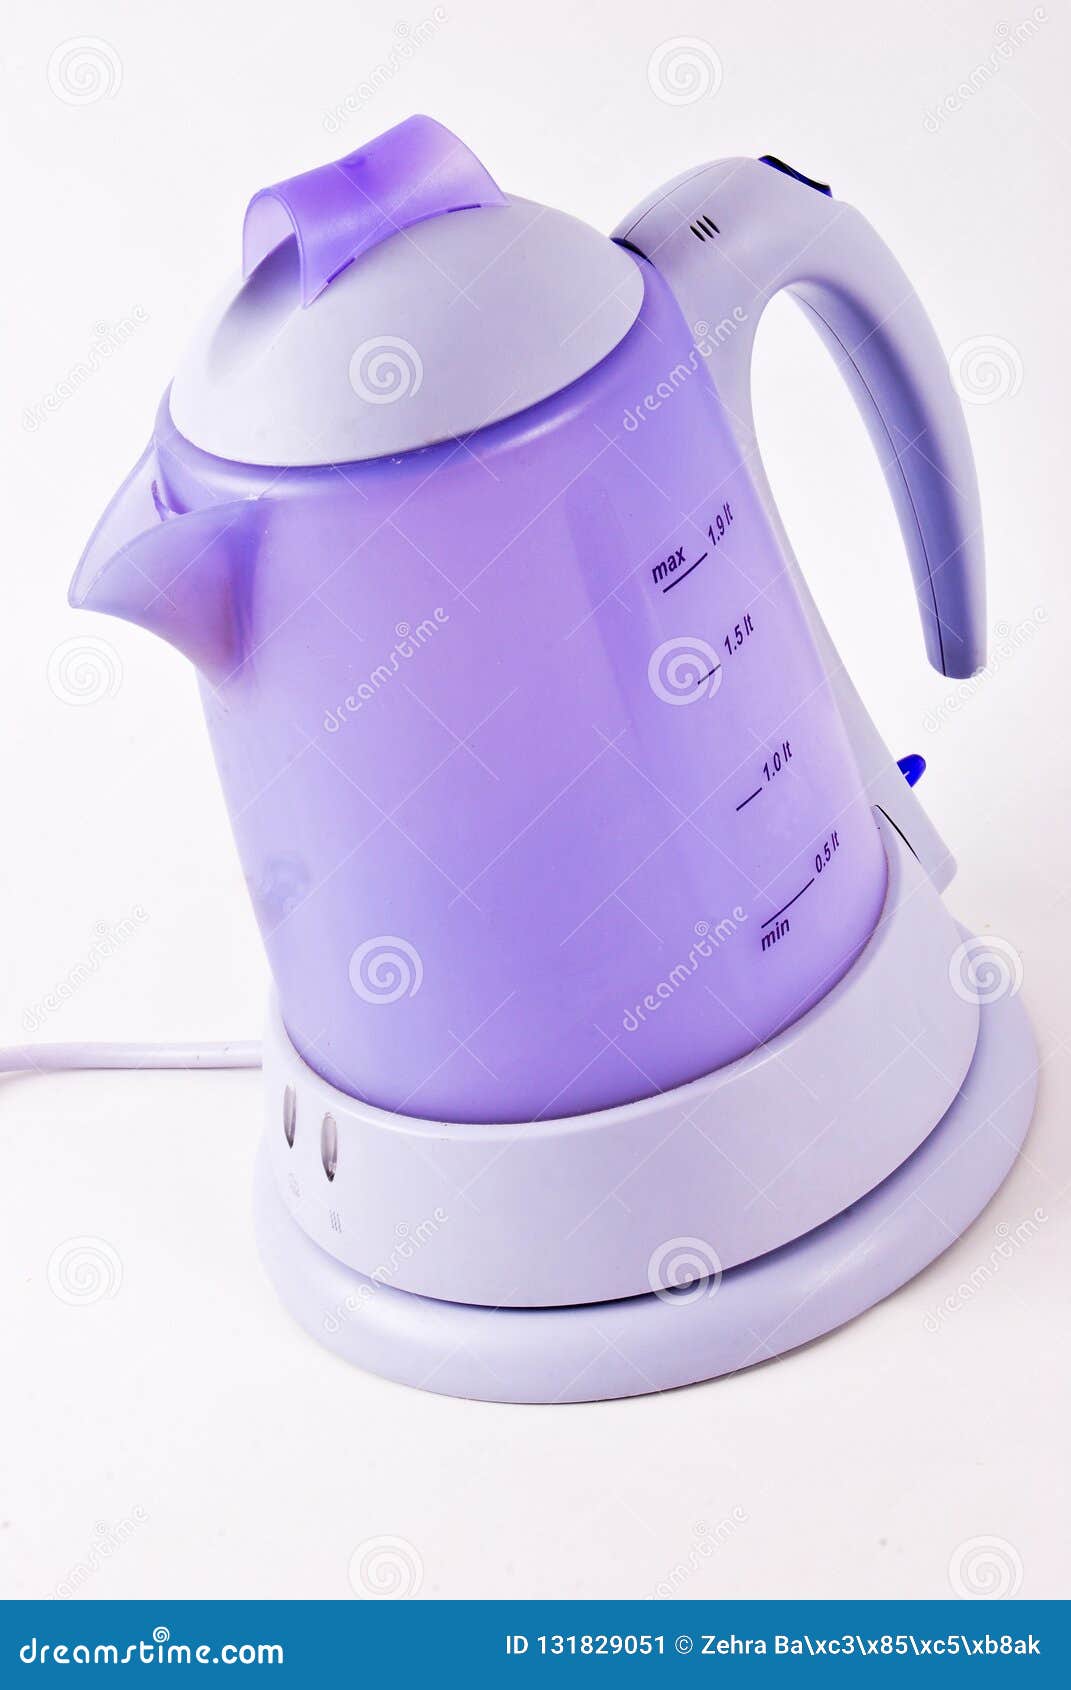 https://thumbs.dreamstime.com/z/purple-electric-kettle-purple-electric-kettle-cable-isolated-white-background-131829051.jpg